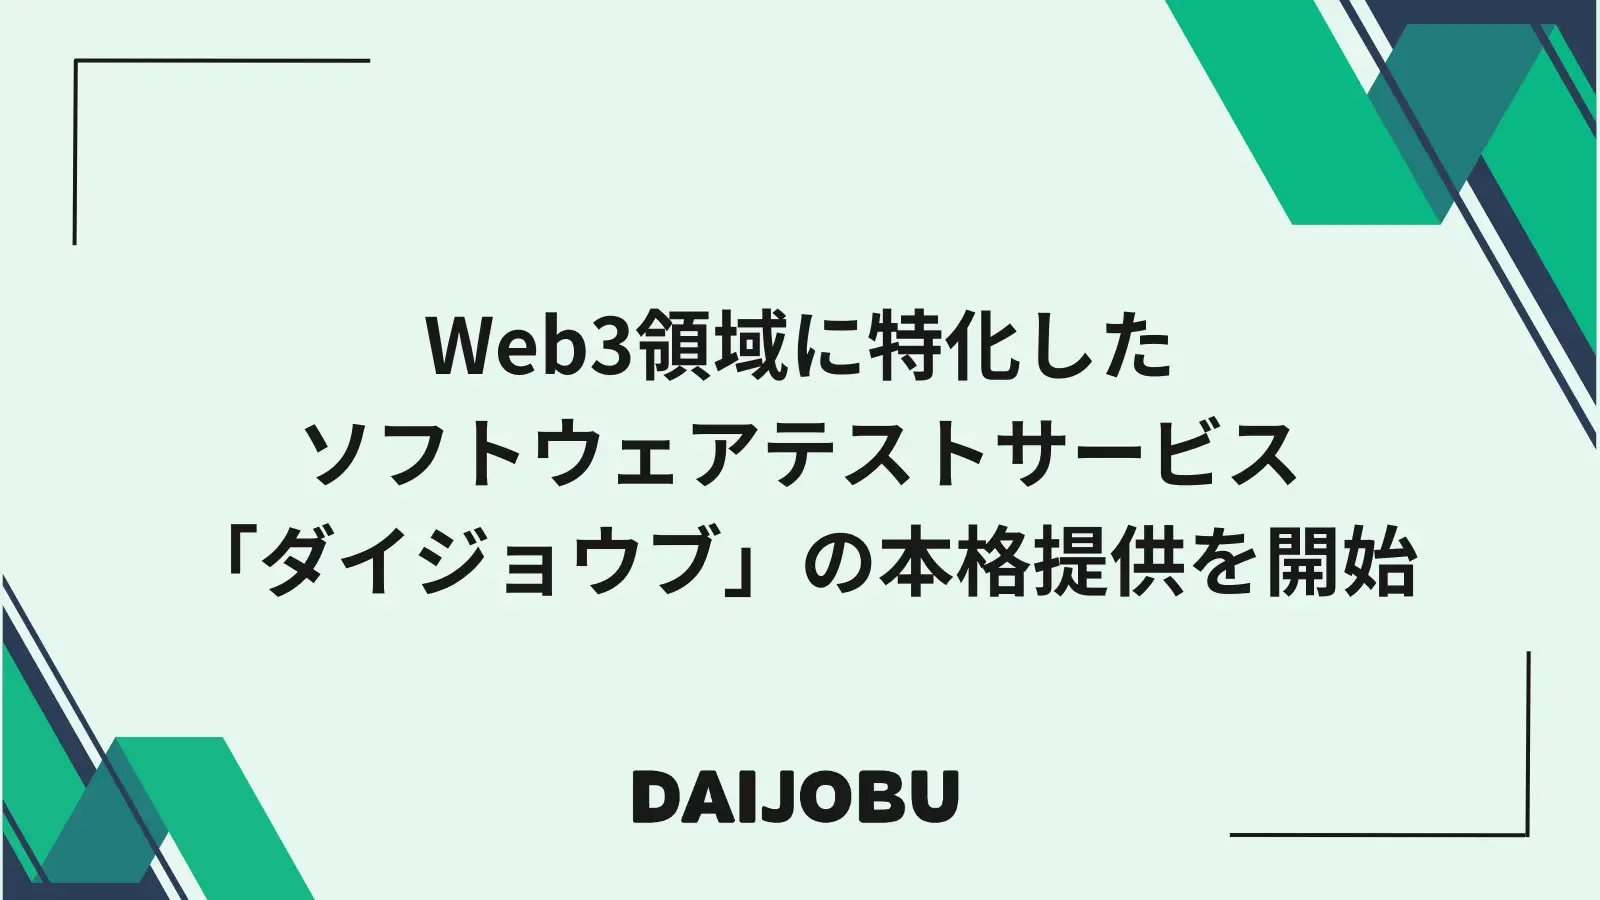 DAIJOBU株式会社が提供するWeb3特化ソフトウェアテストサービス「ダイジョウブ」